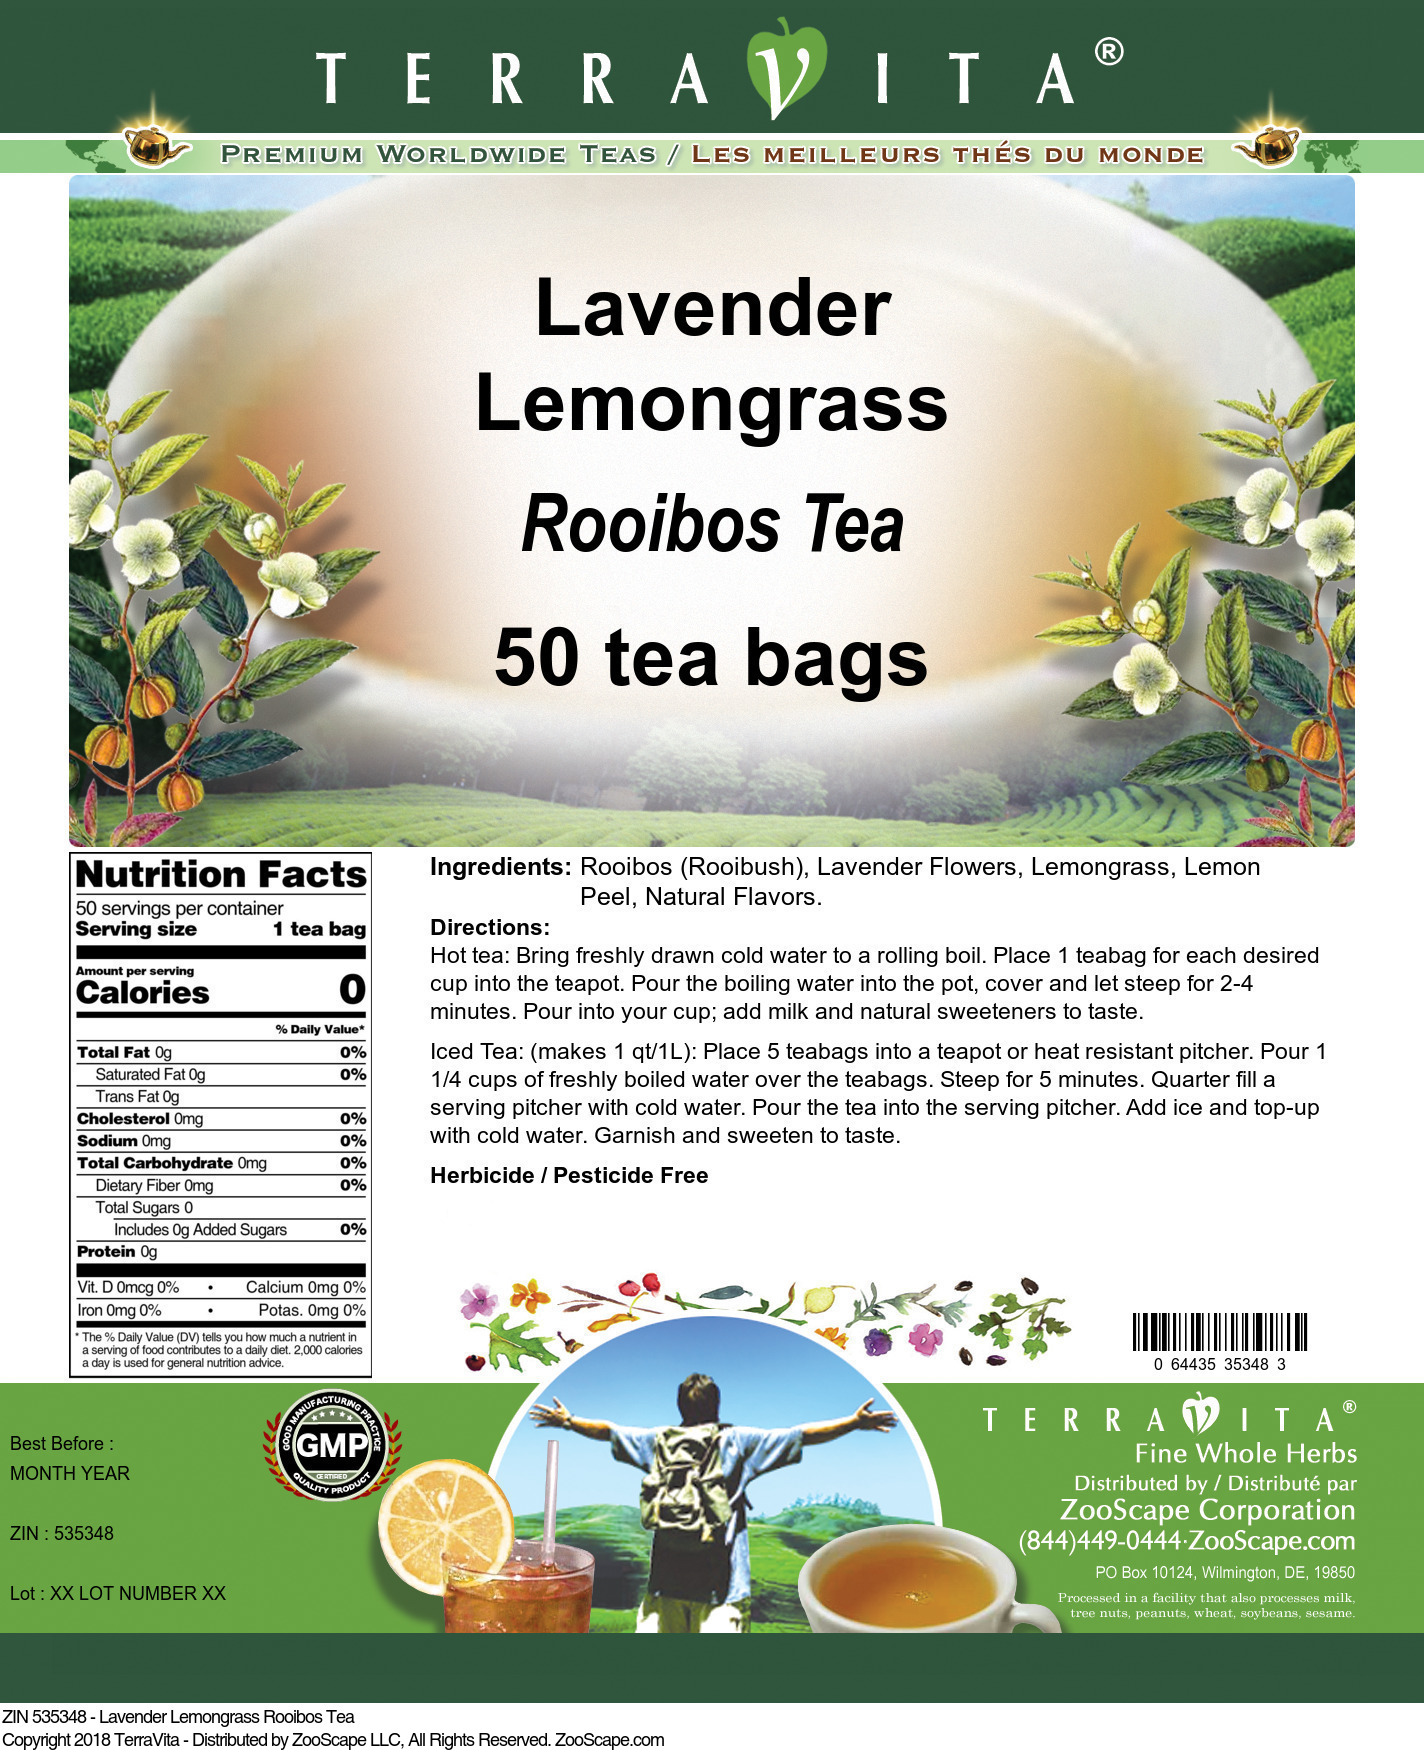 Lavender Lemongrass Rooibos Tea - Label